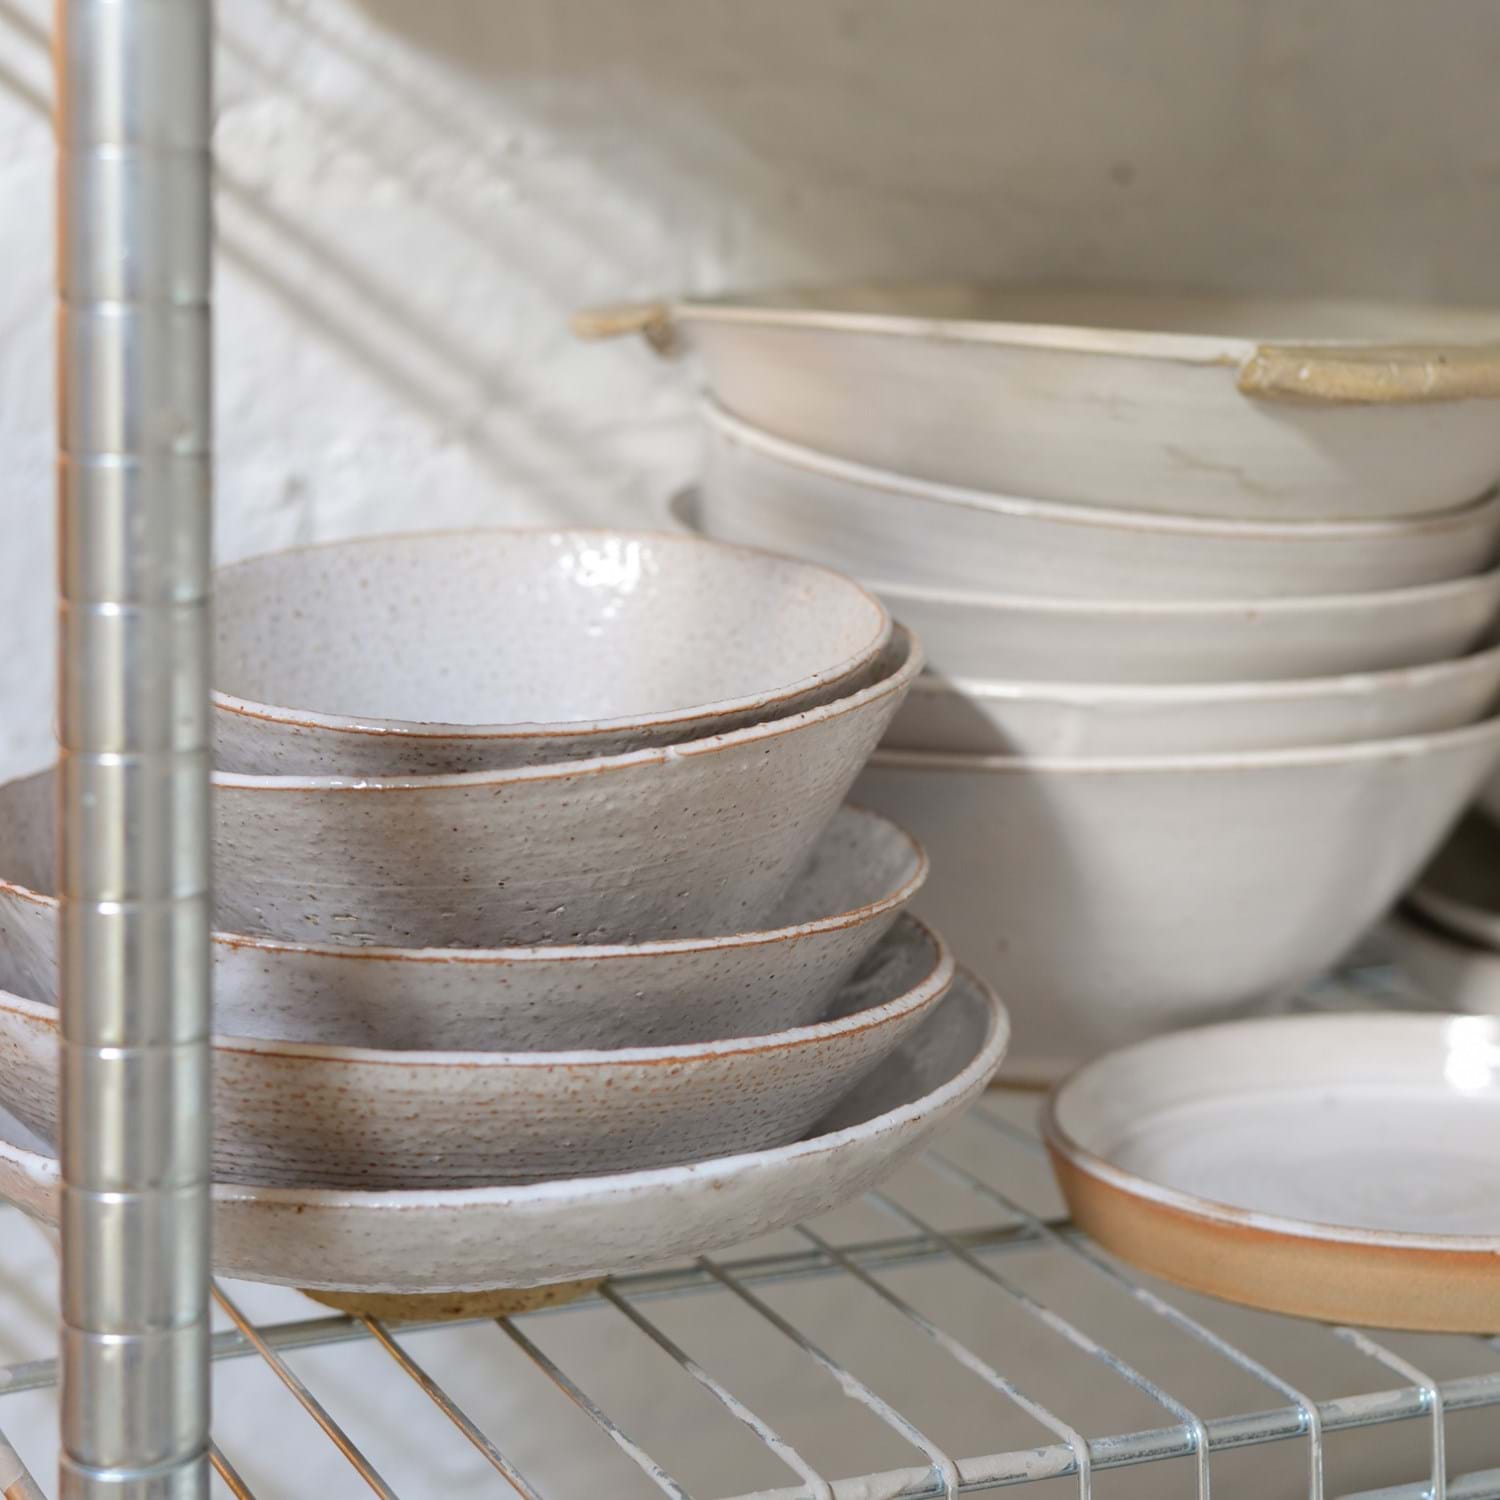 Ceramic bowls and plates on a racking shelf